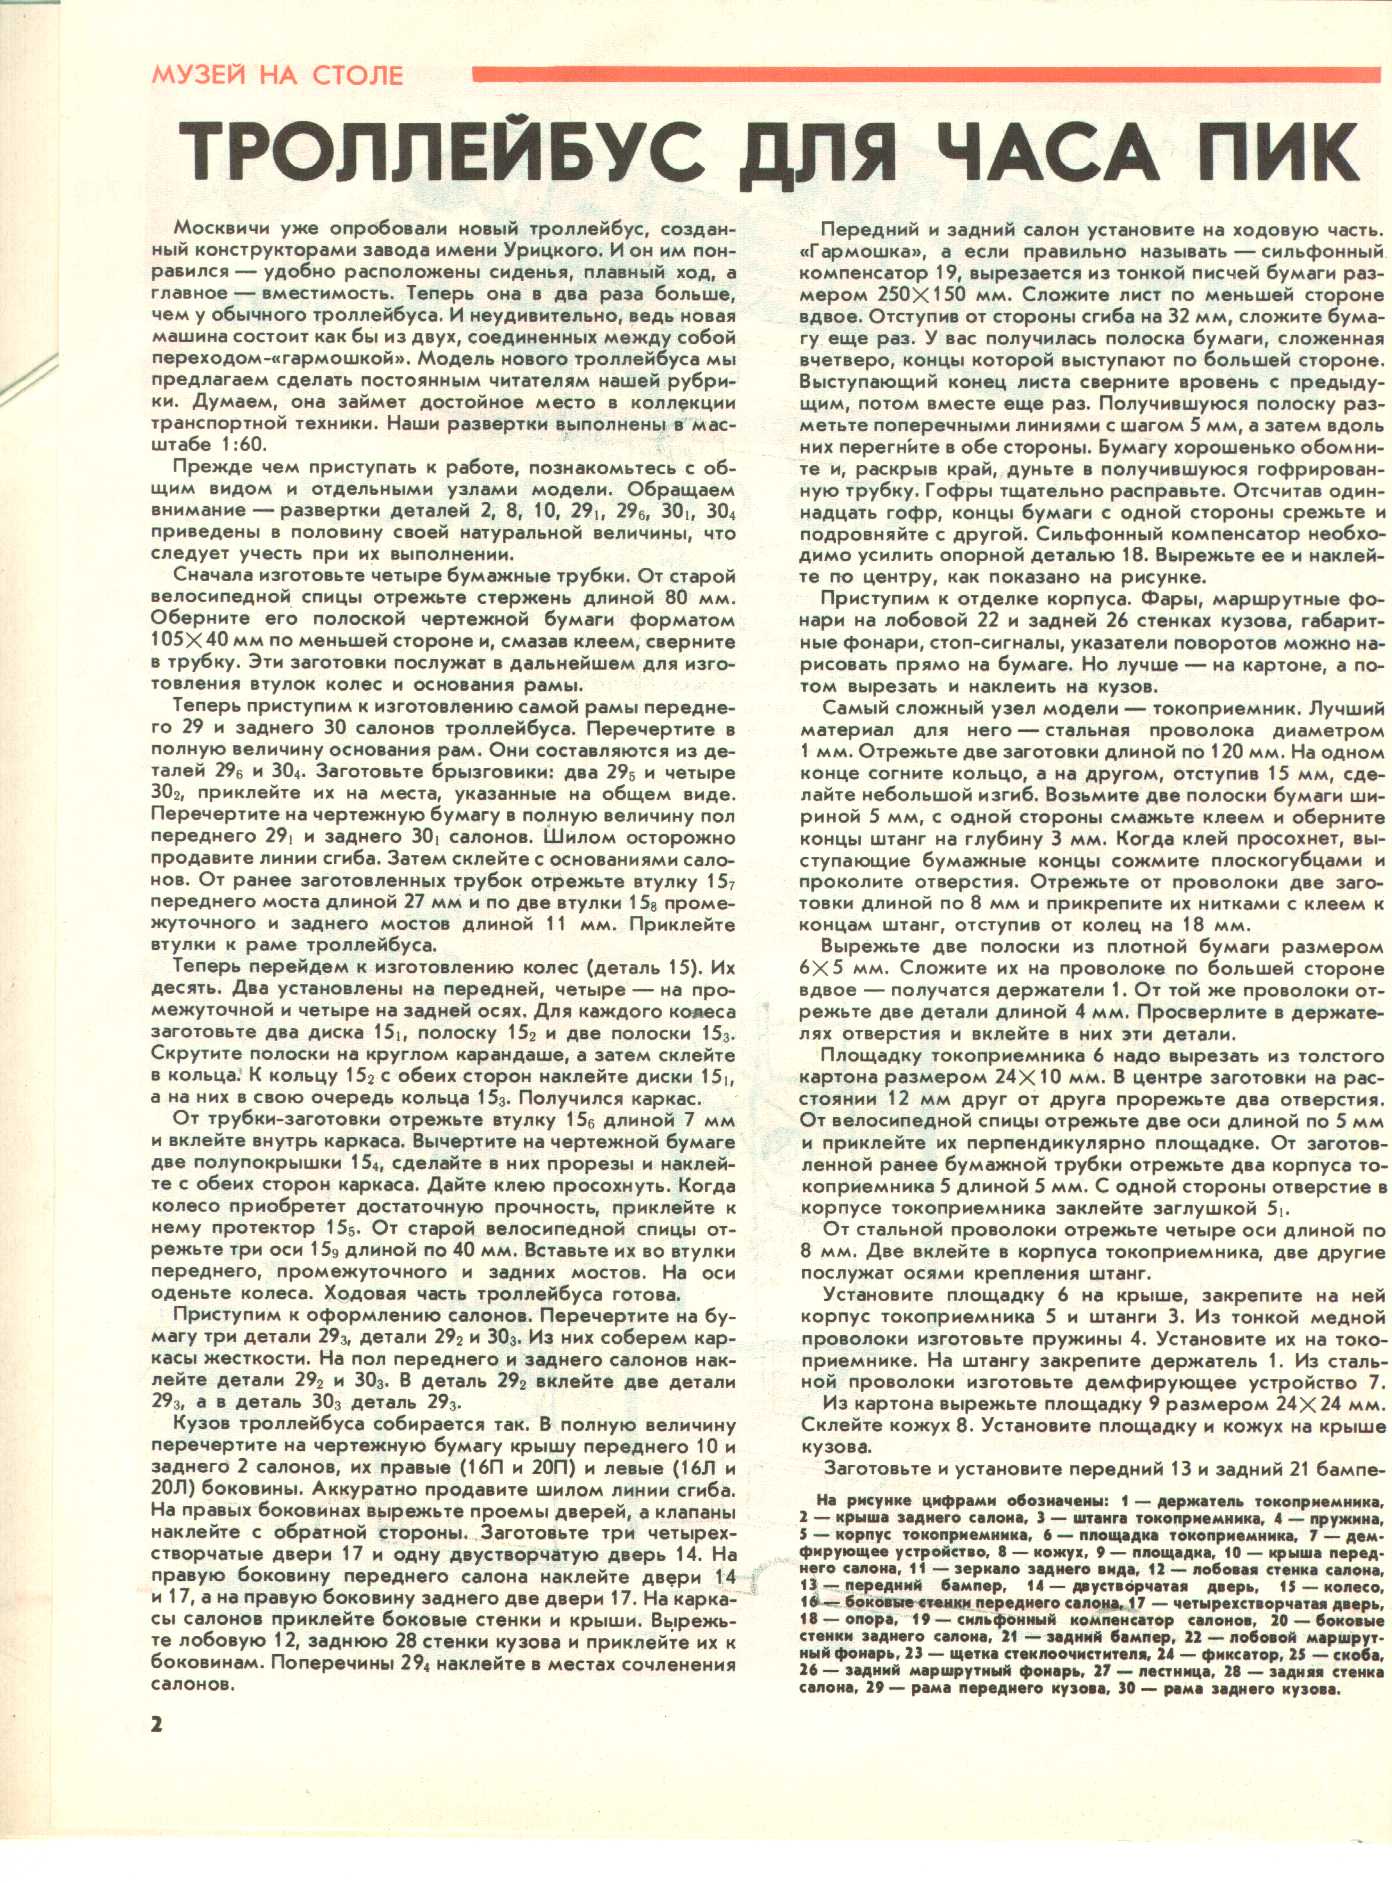 "ЮТ для умелых рук" 8, 1989, 2 c.